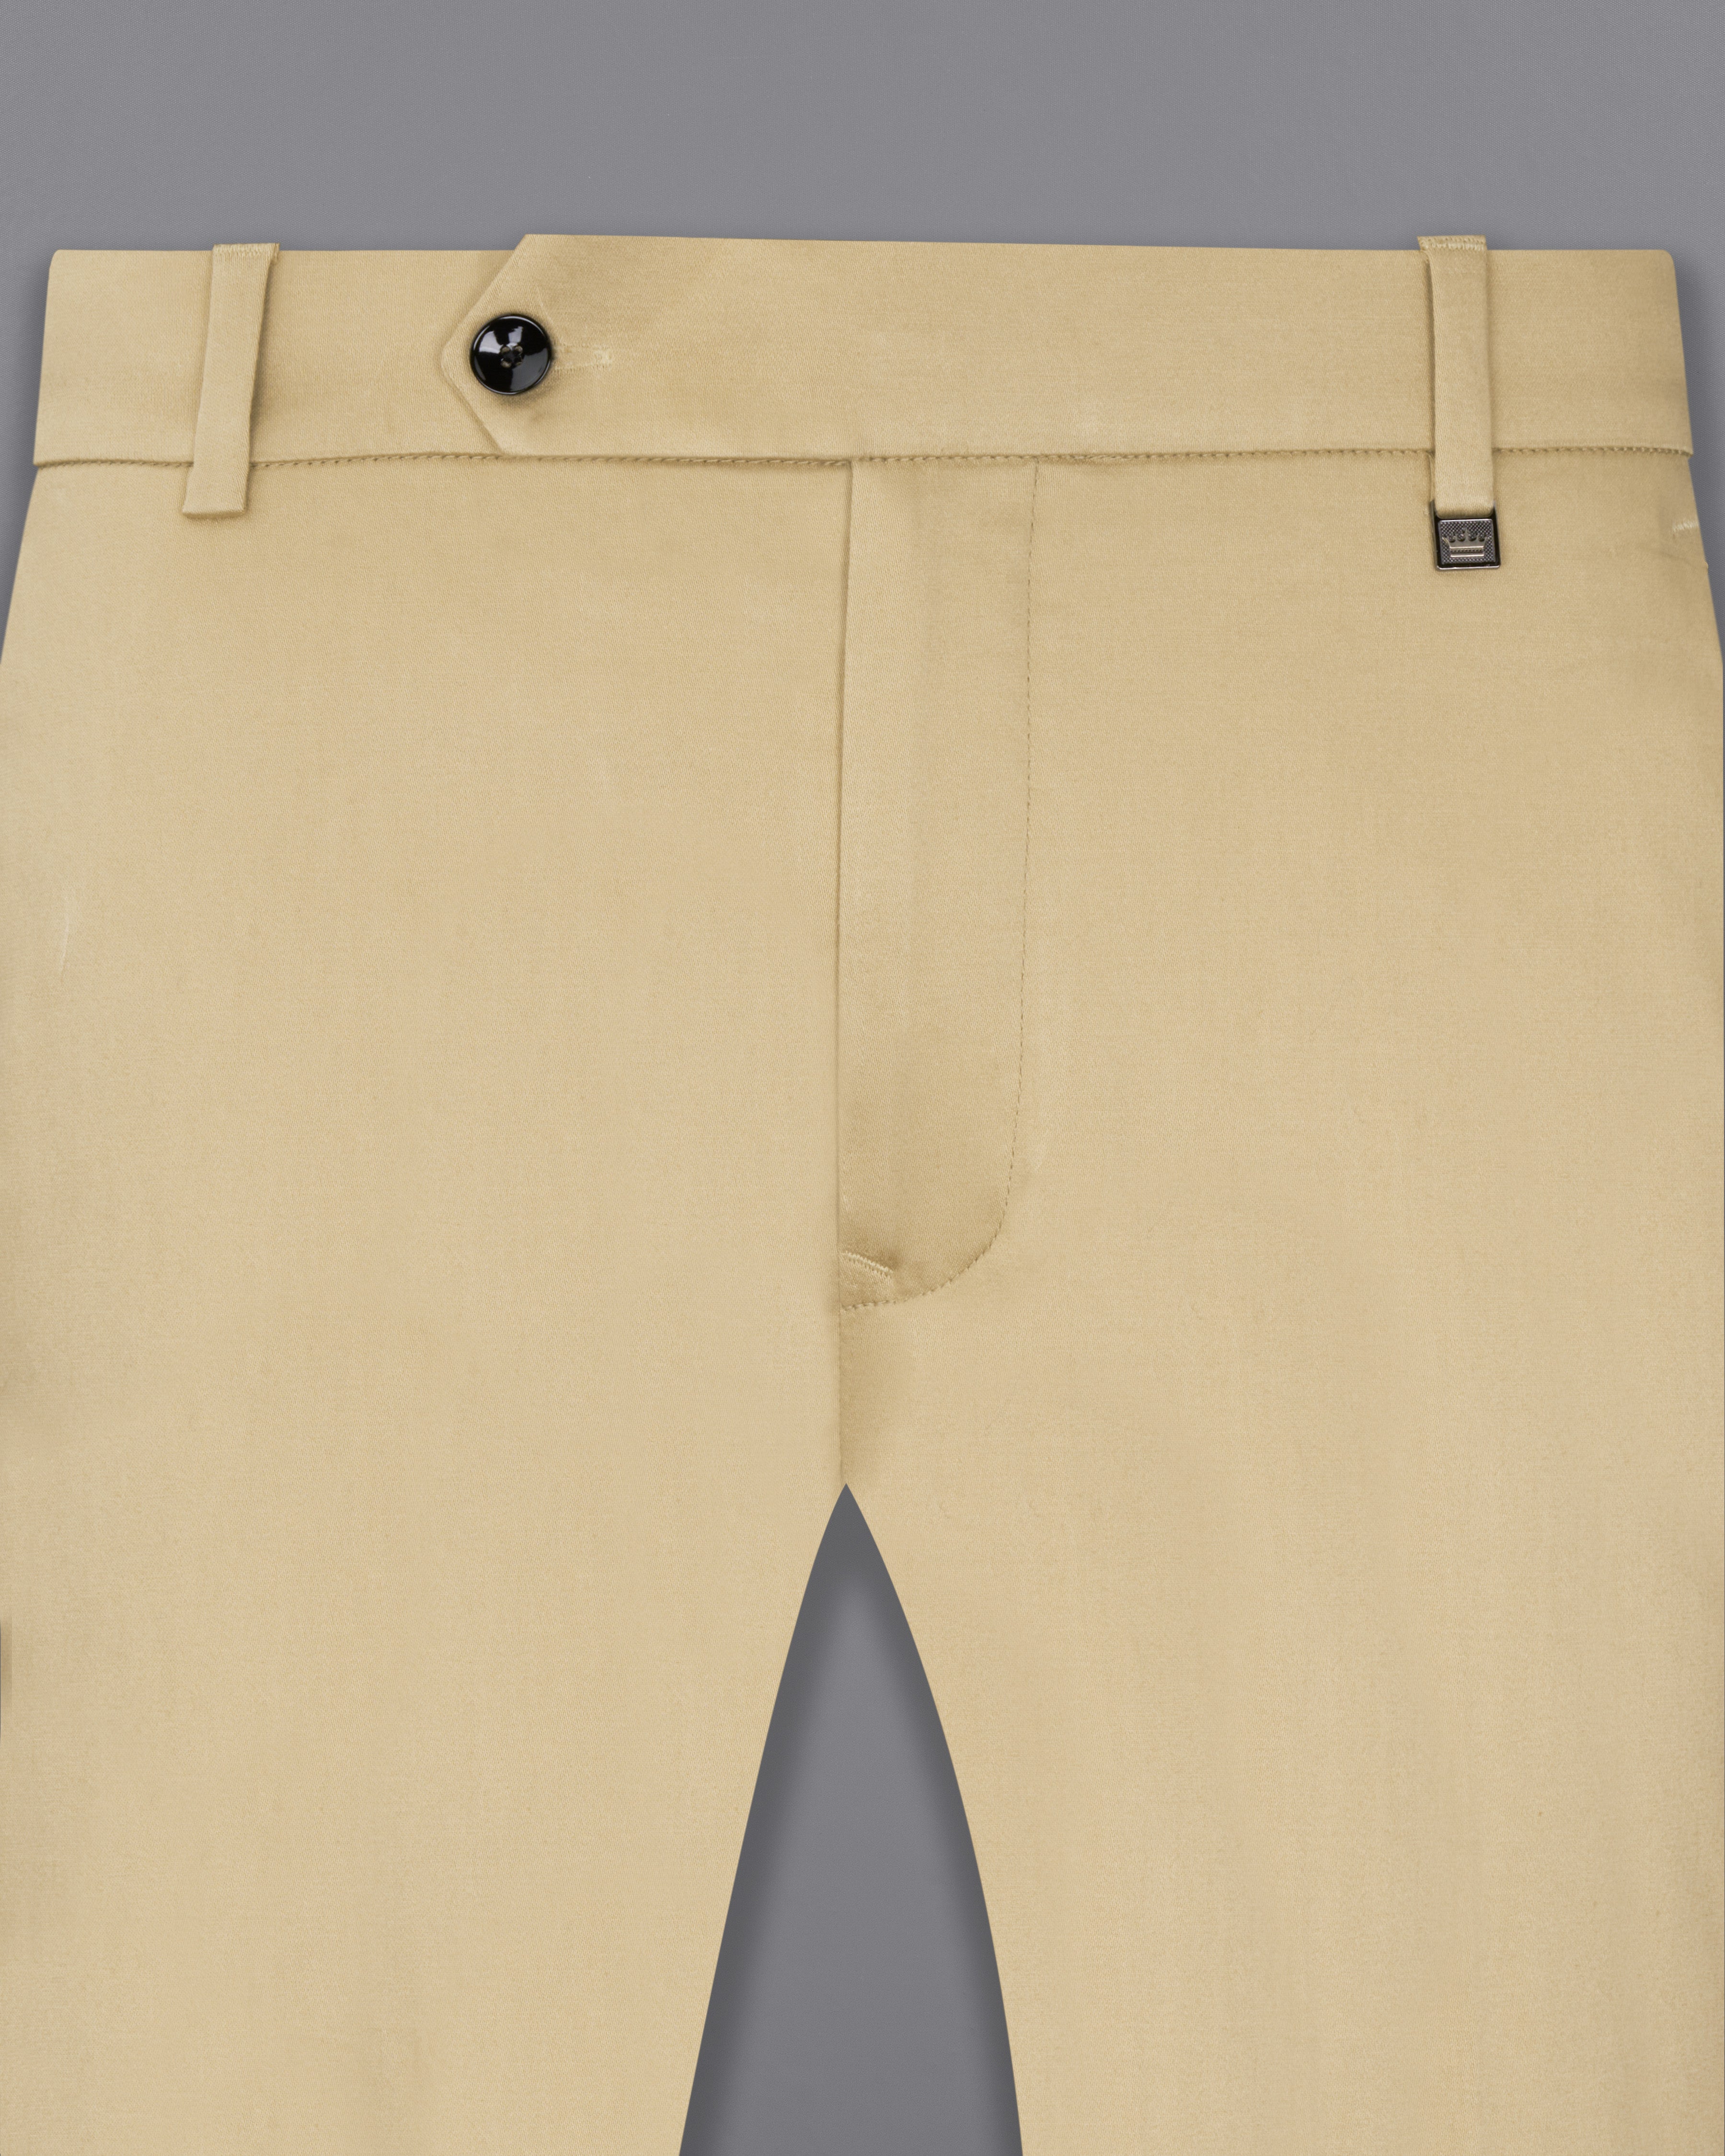 Slim Fit B-91 Formal Brown Textured Trouser - Bank